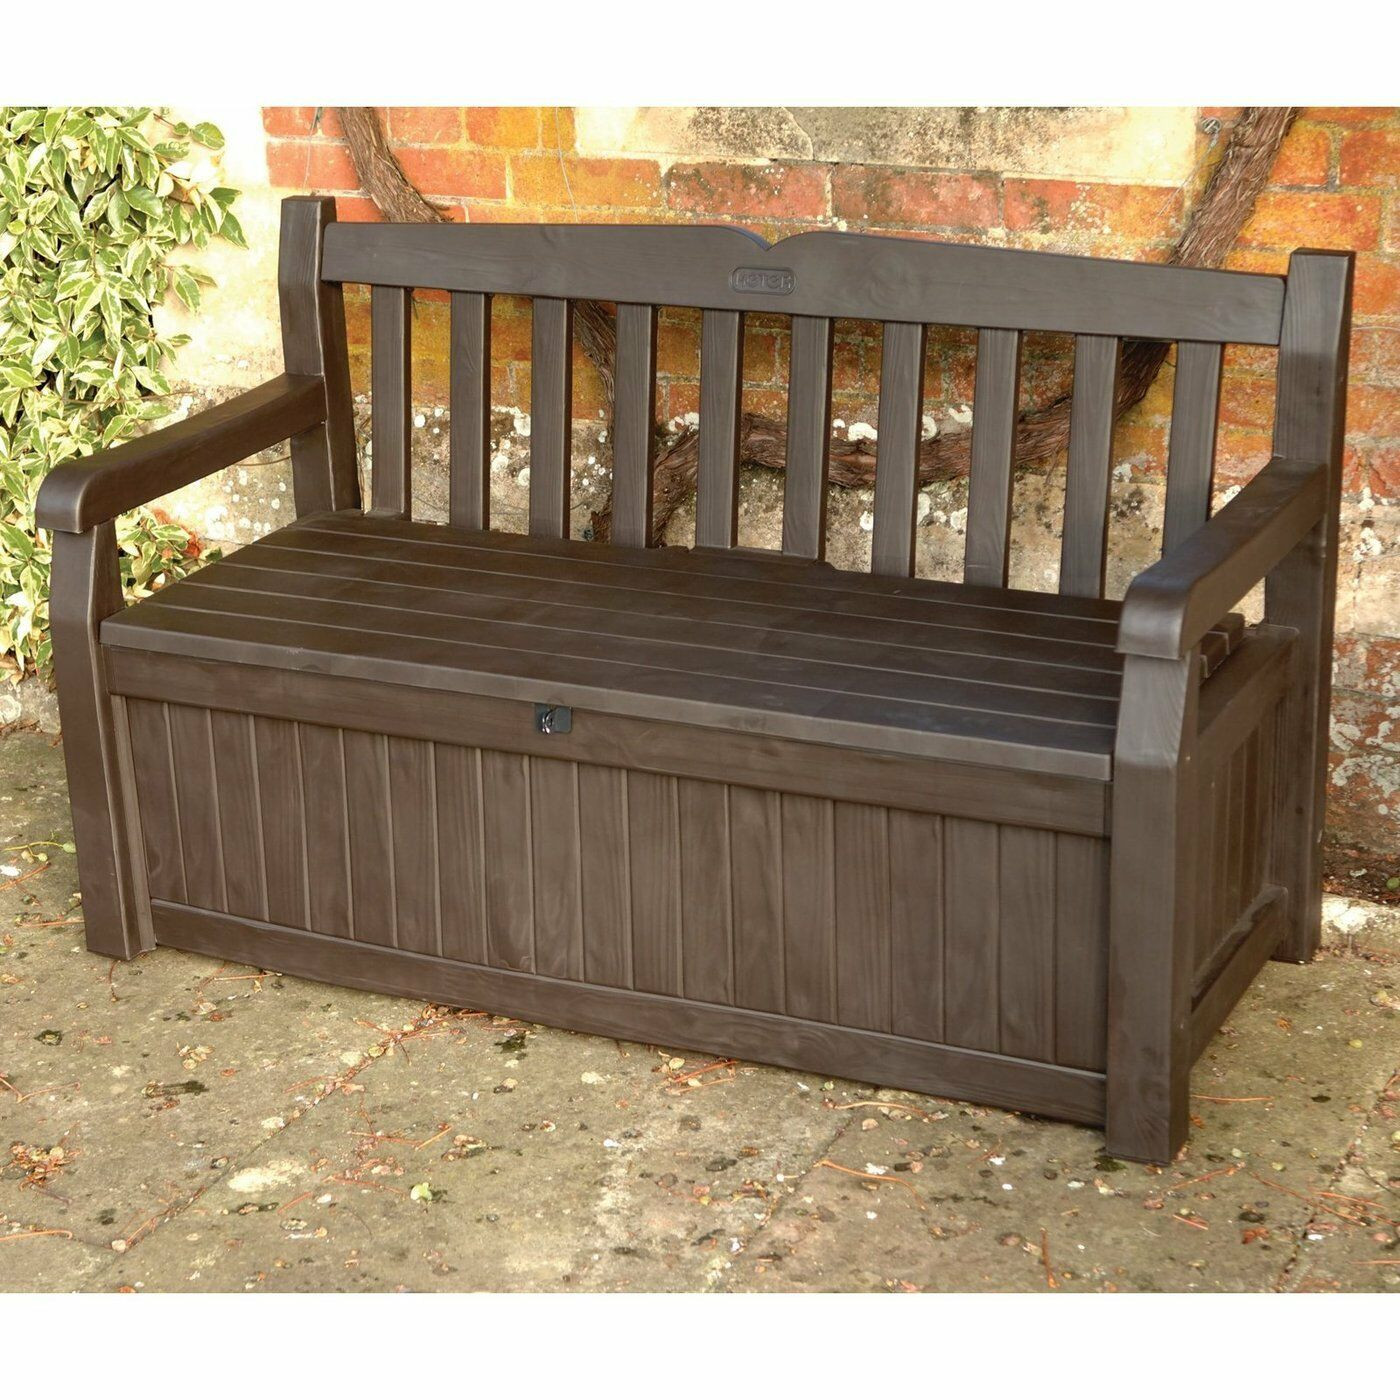 Best ideas about Outdoor Storage Bench
. Save or Pin Outdoor Storage Bench Box Patio Deck Brown Pool Garden Now.